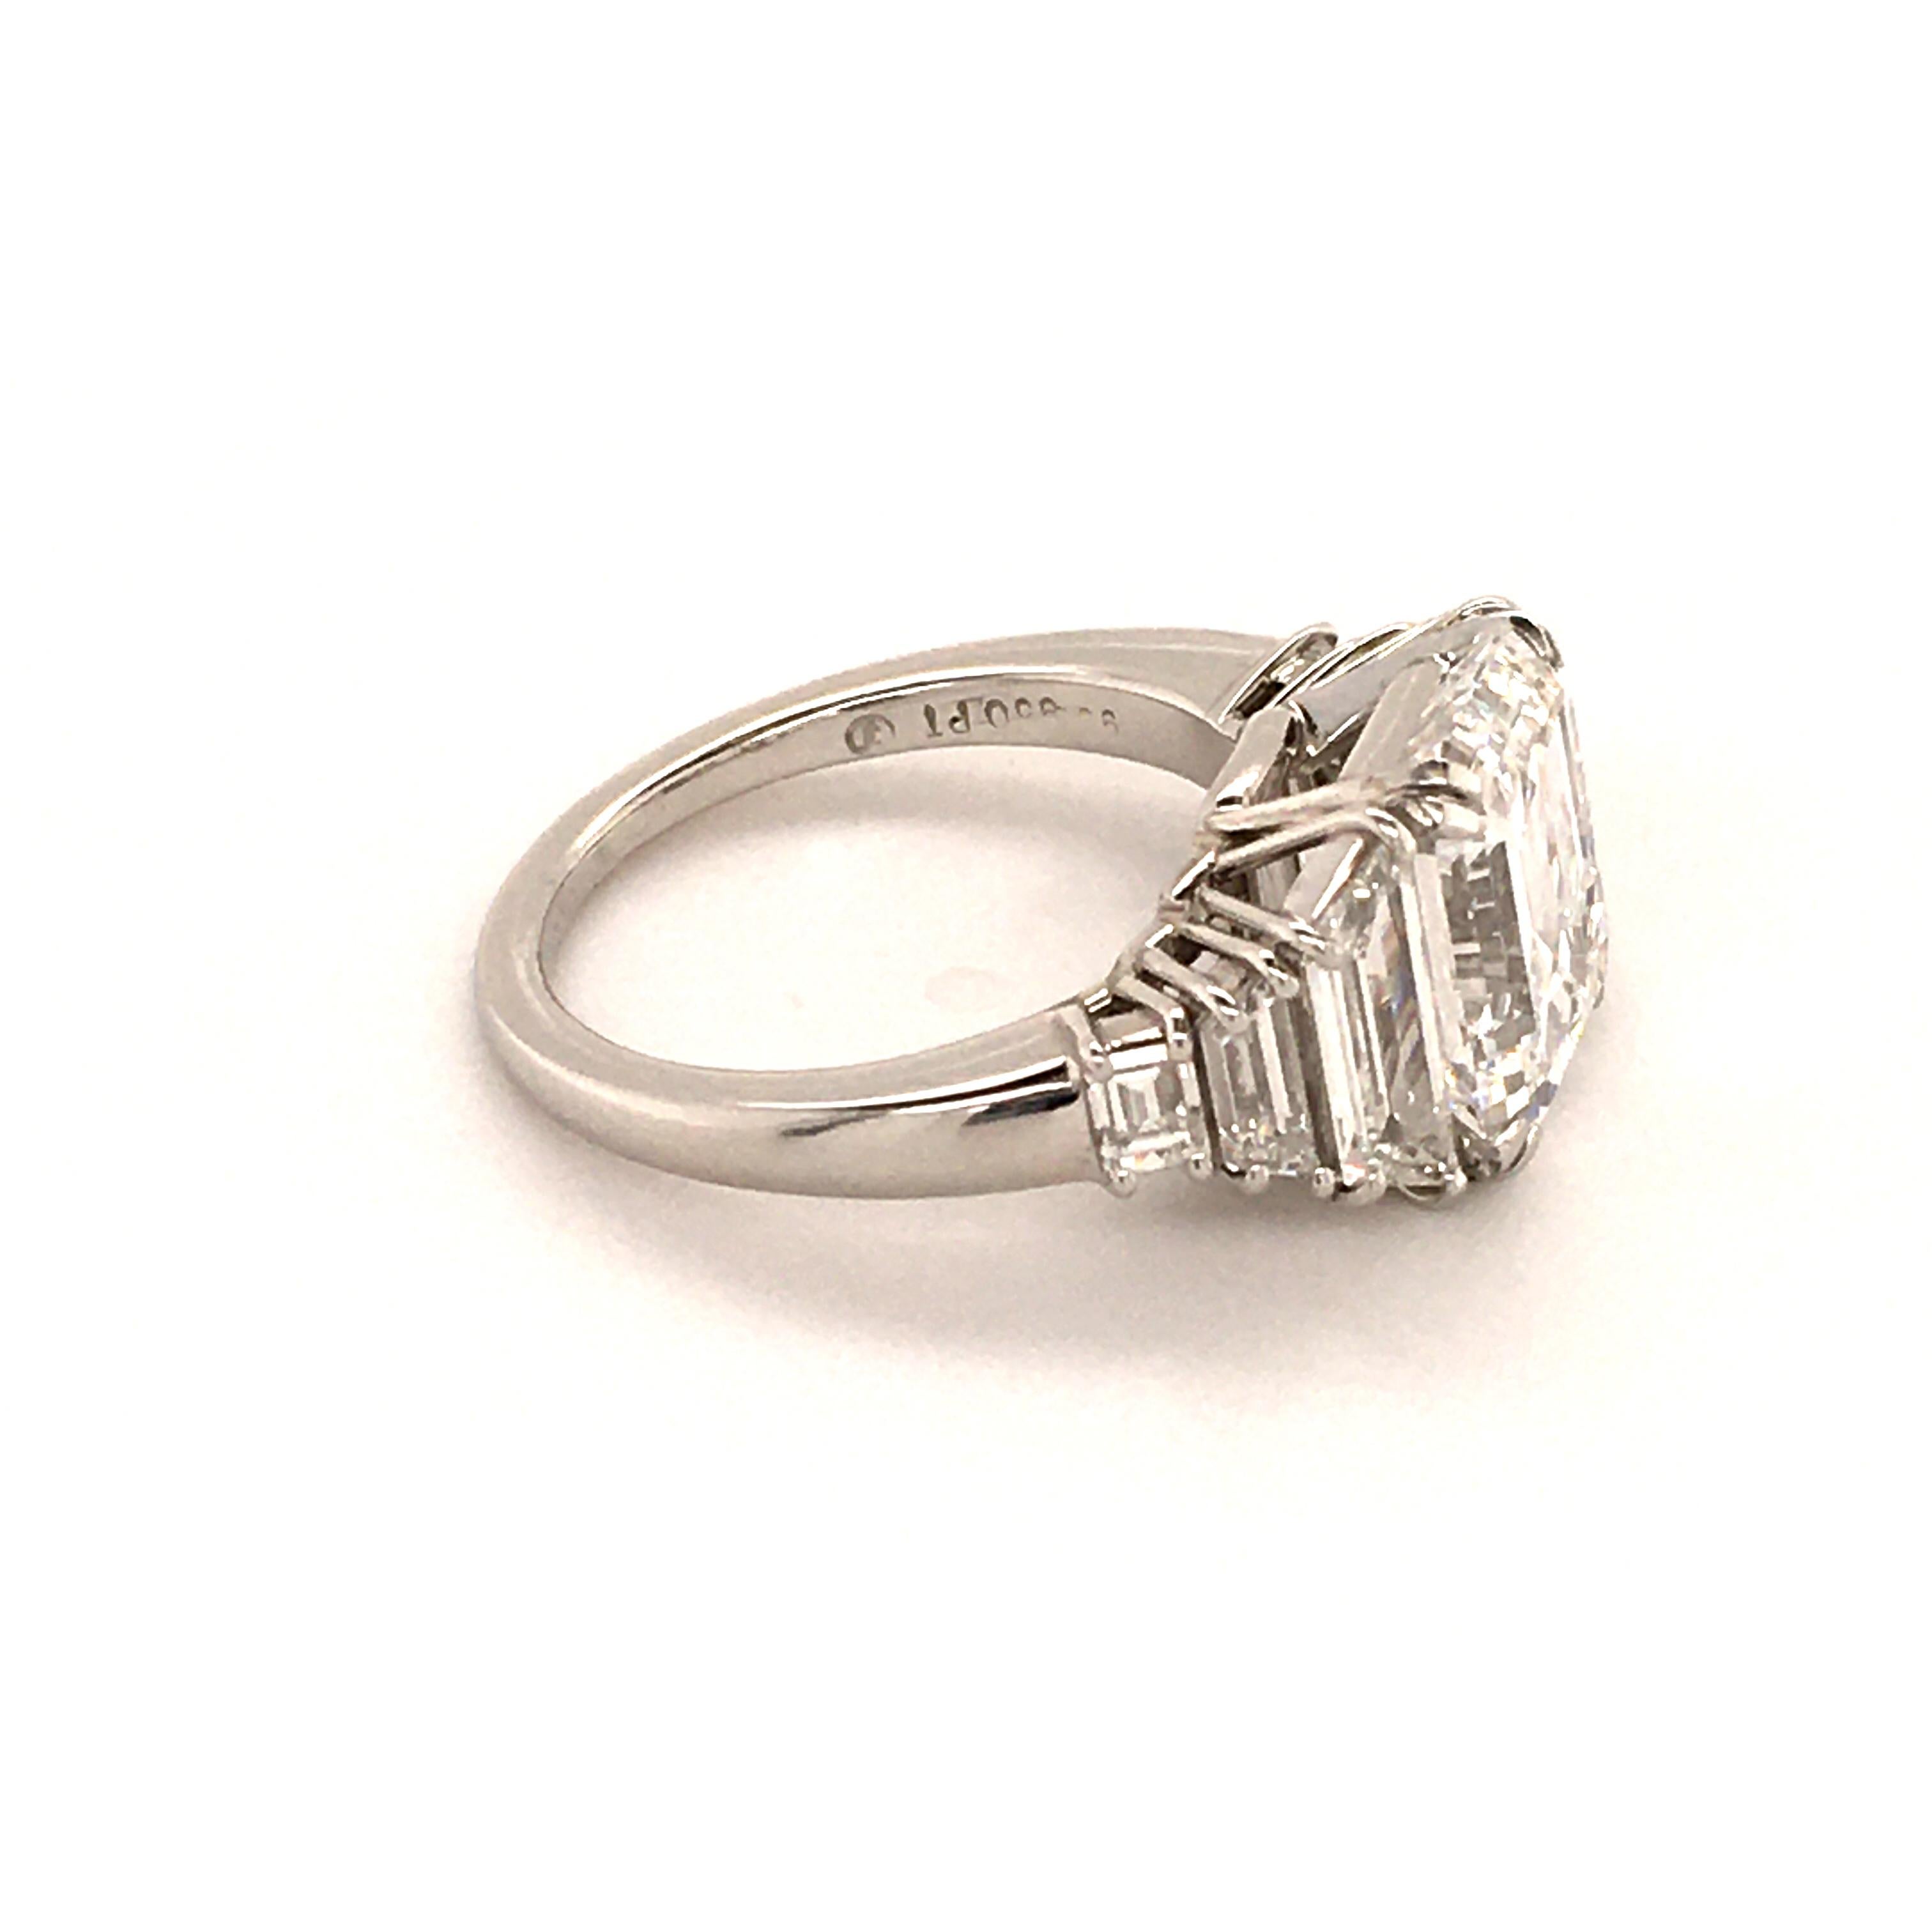 Modern Harry Winston GIA Certified 4.63 Carat Emerald Cut Diamond Ring in Platinum 950 For Sale